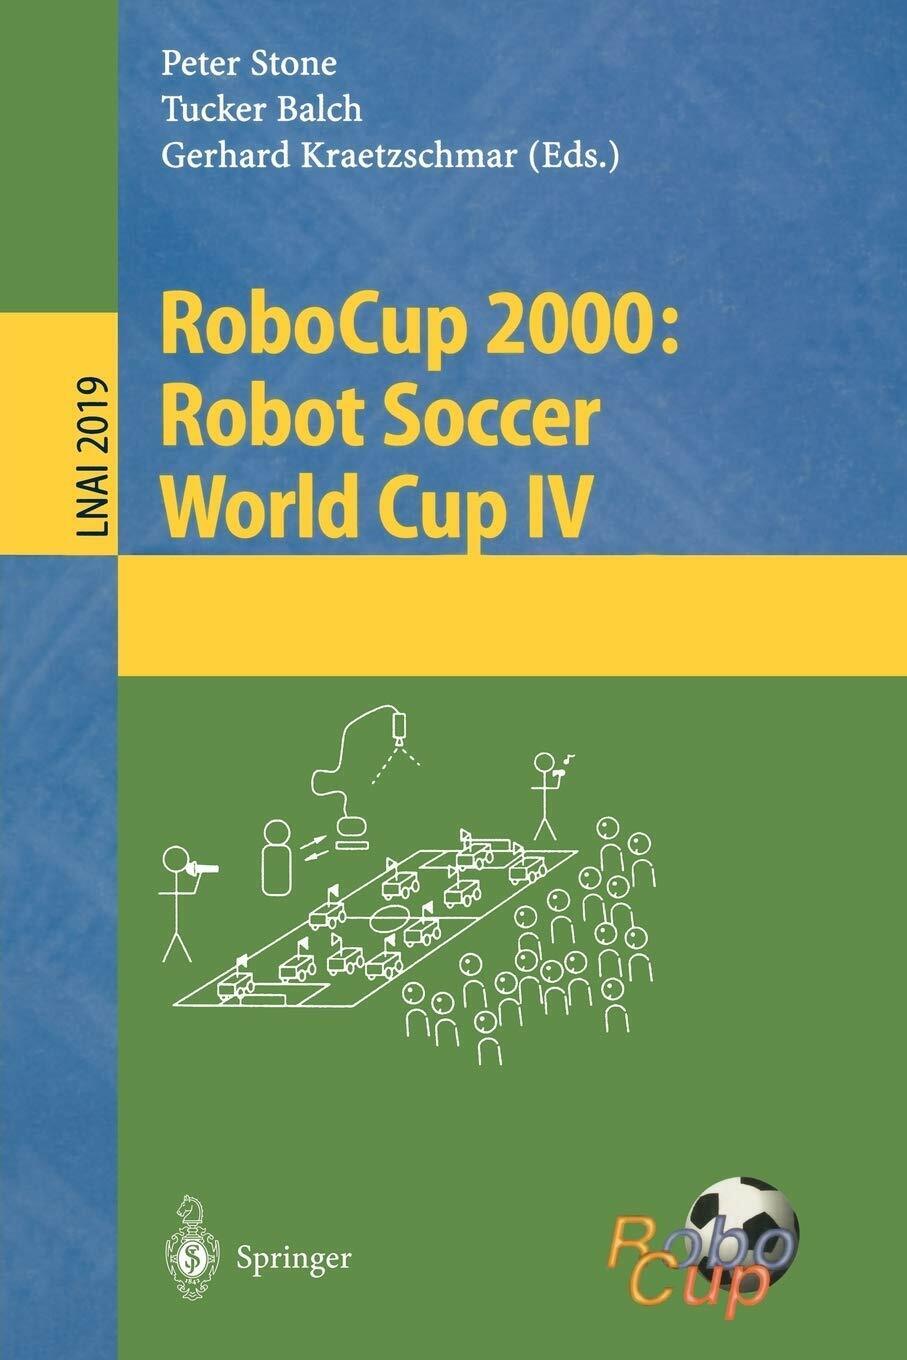 RoboCup 2000: Robot Soccer World Cup IV - P. Stone - Springer, 2001 